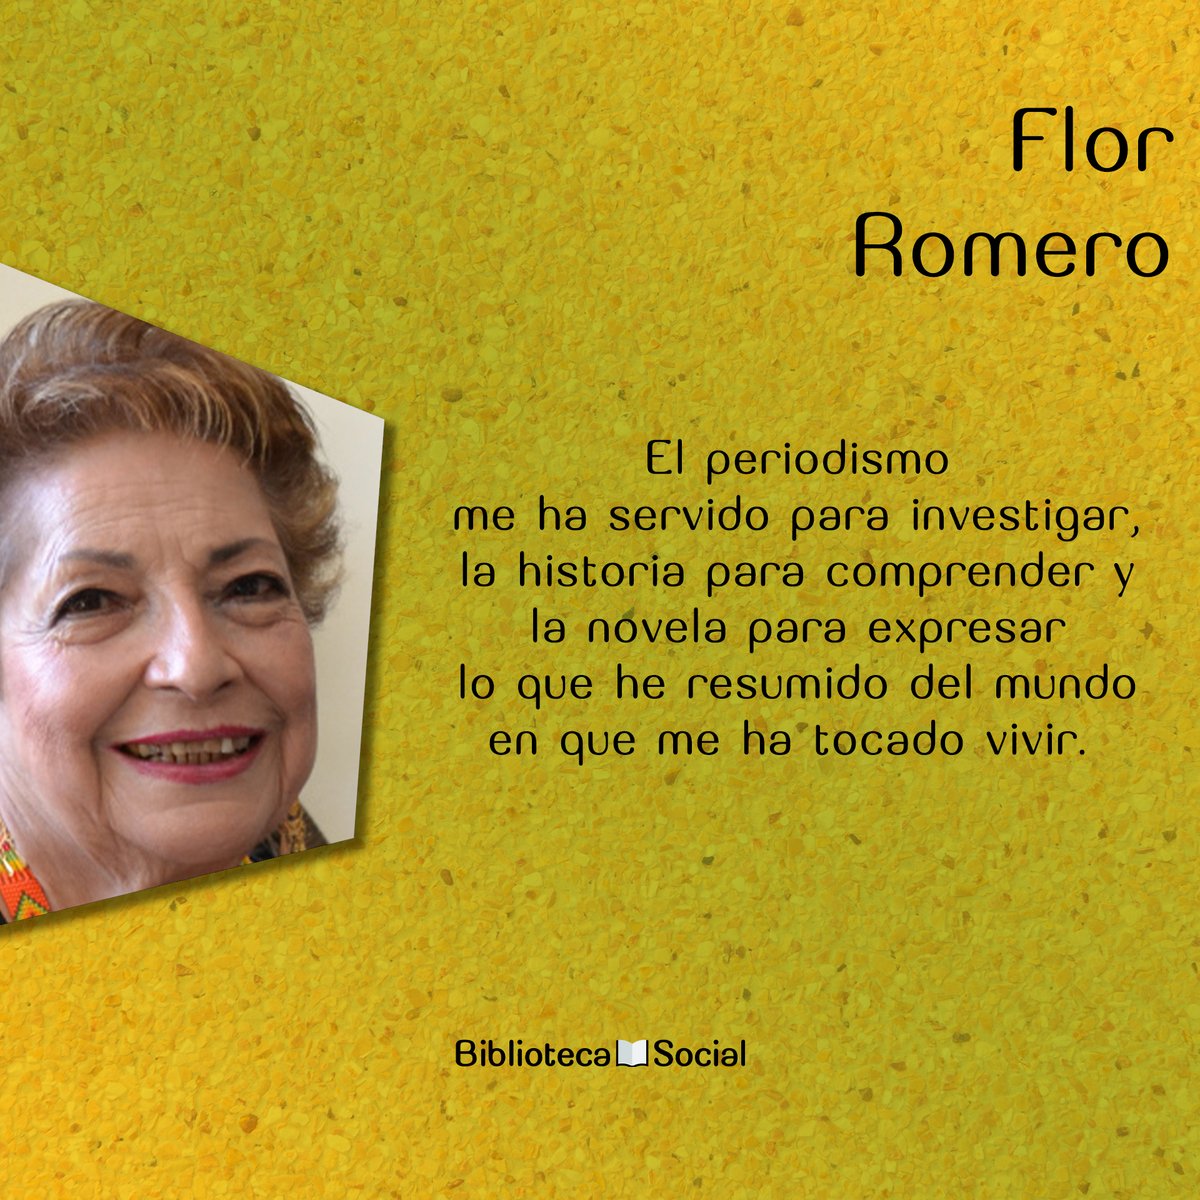 #FlorRomero
#BibliotecaSocial #BS